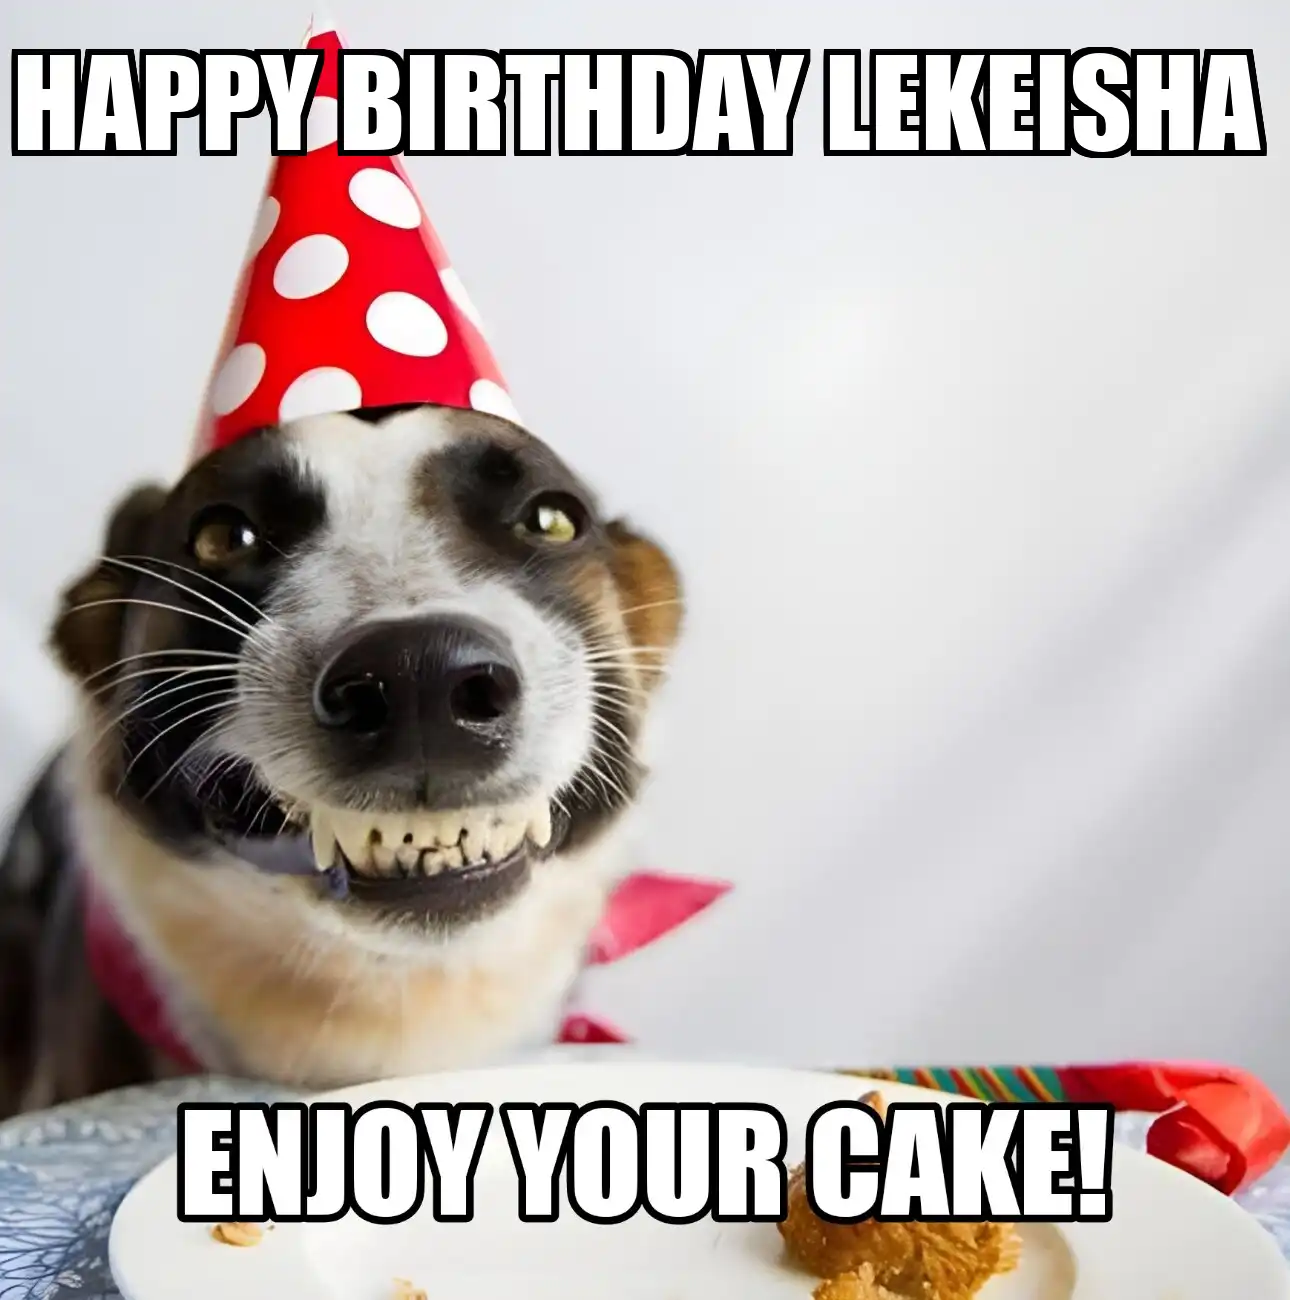 Happy Birthday Lekeisha Enjoy Your Cake Dog Meme